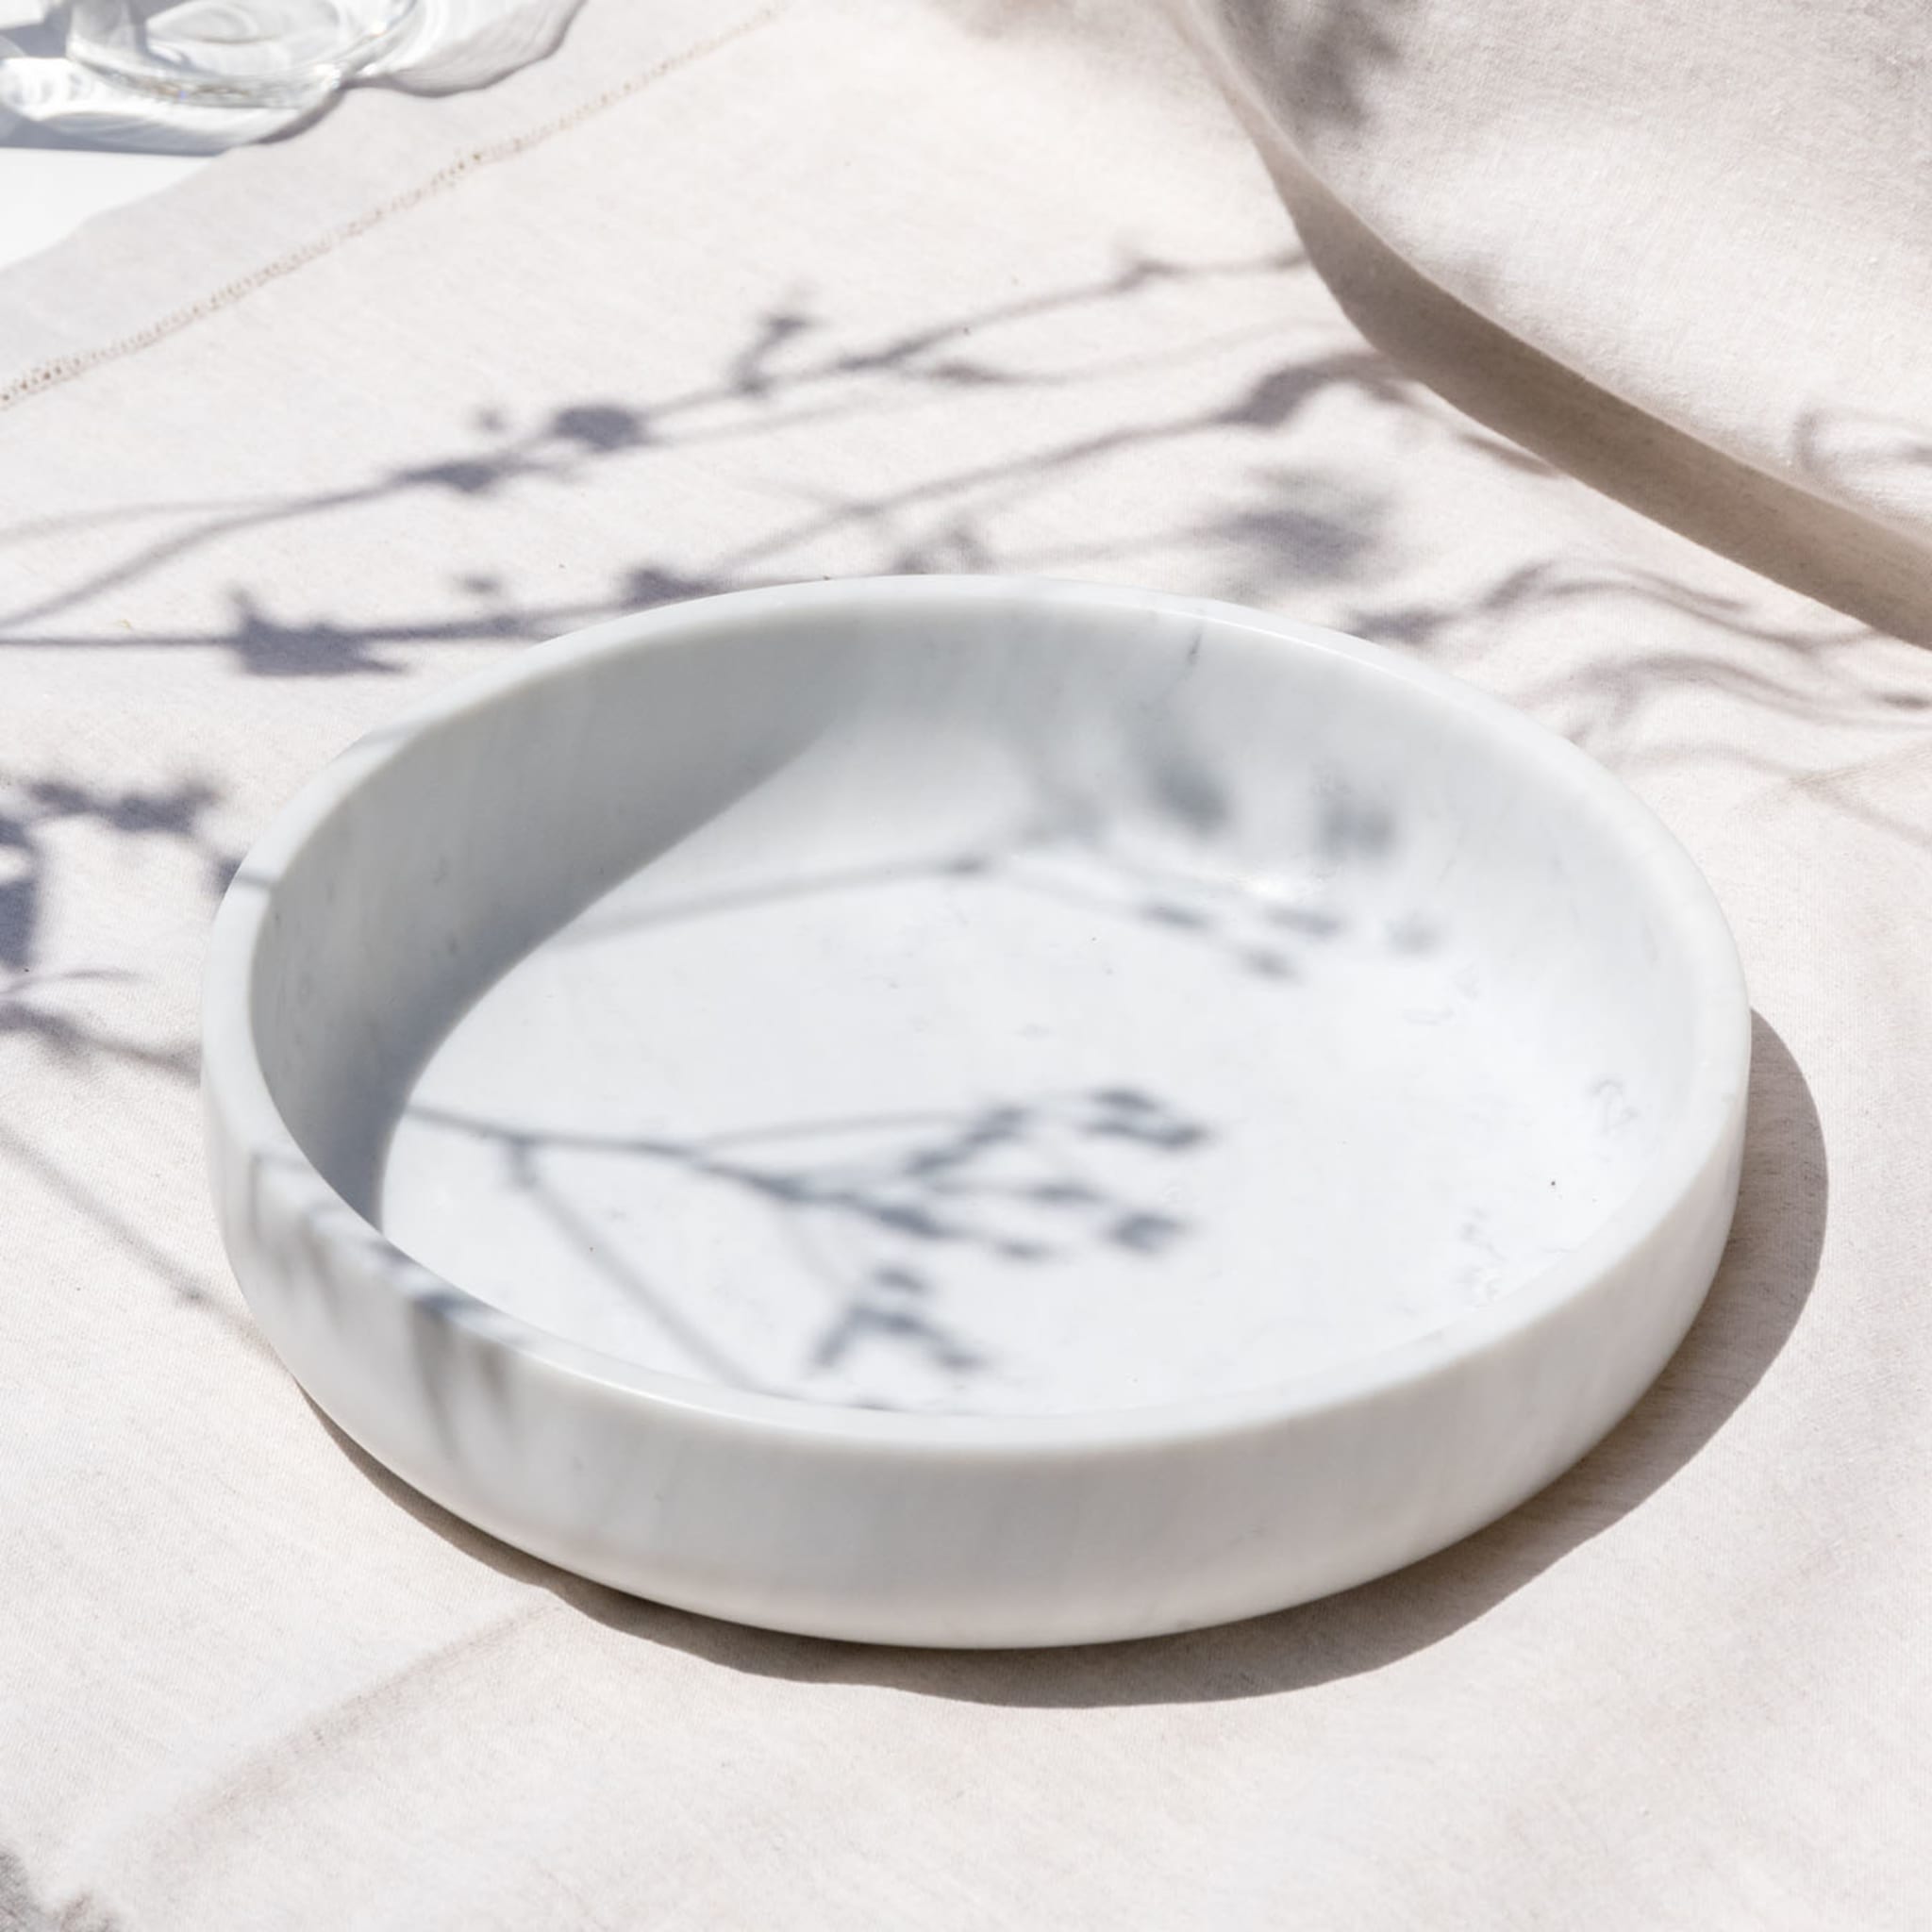 Diogenea - A Tale of Bowls White Carrara Bowl - Alternative view 2